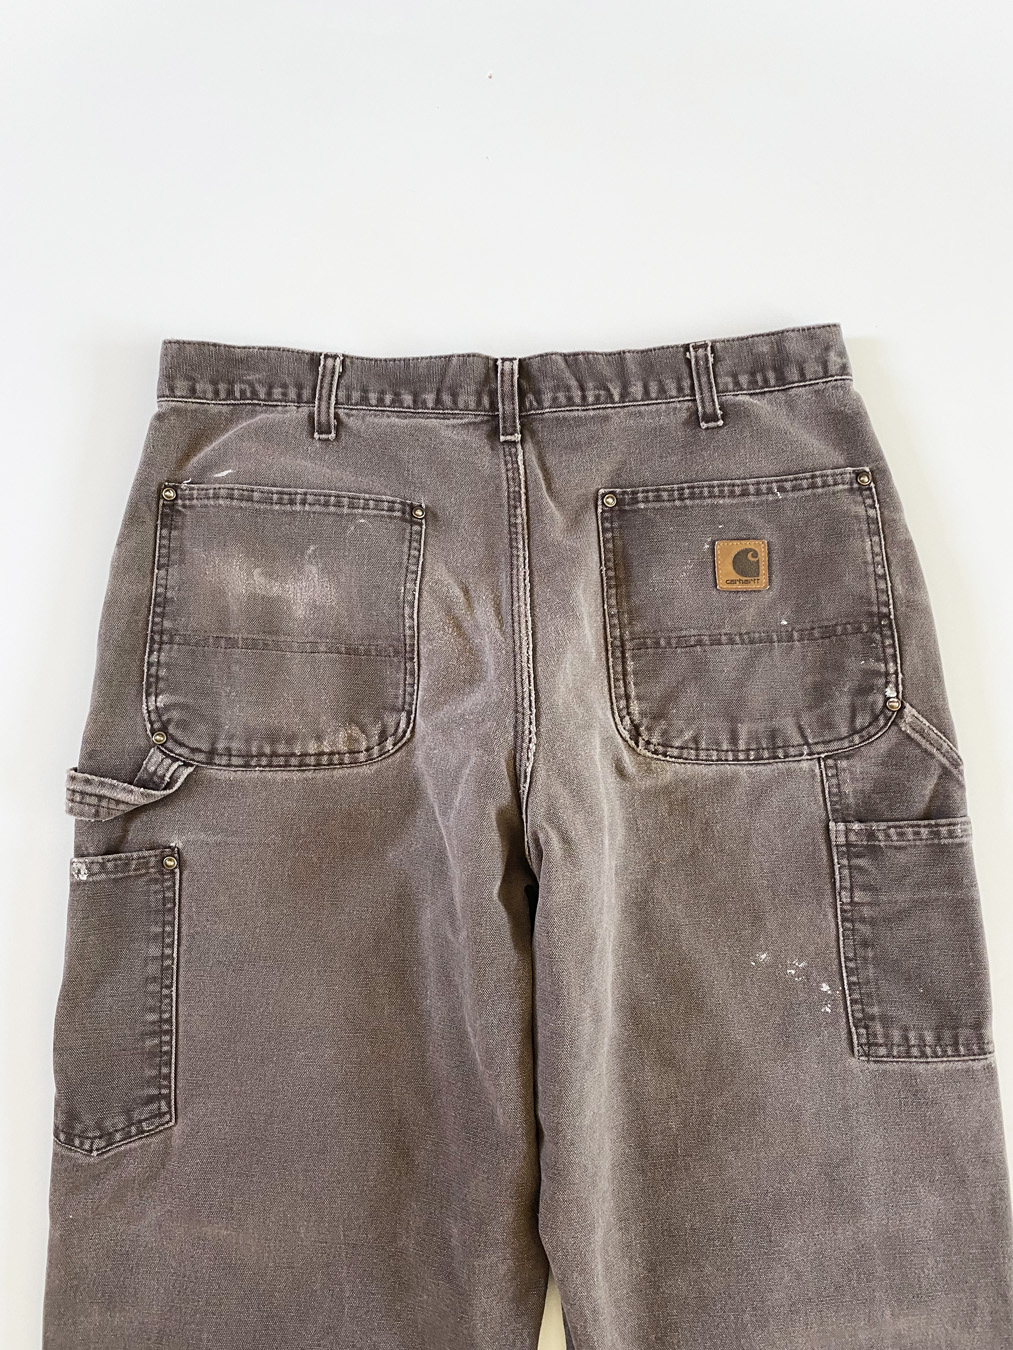 Faded Brown Carhartt Double Knee Pants - 5 Star Vintage